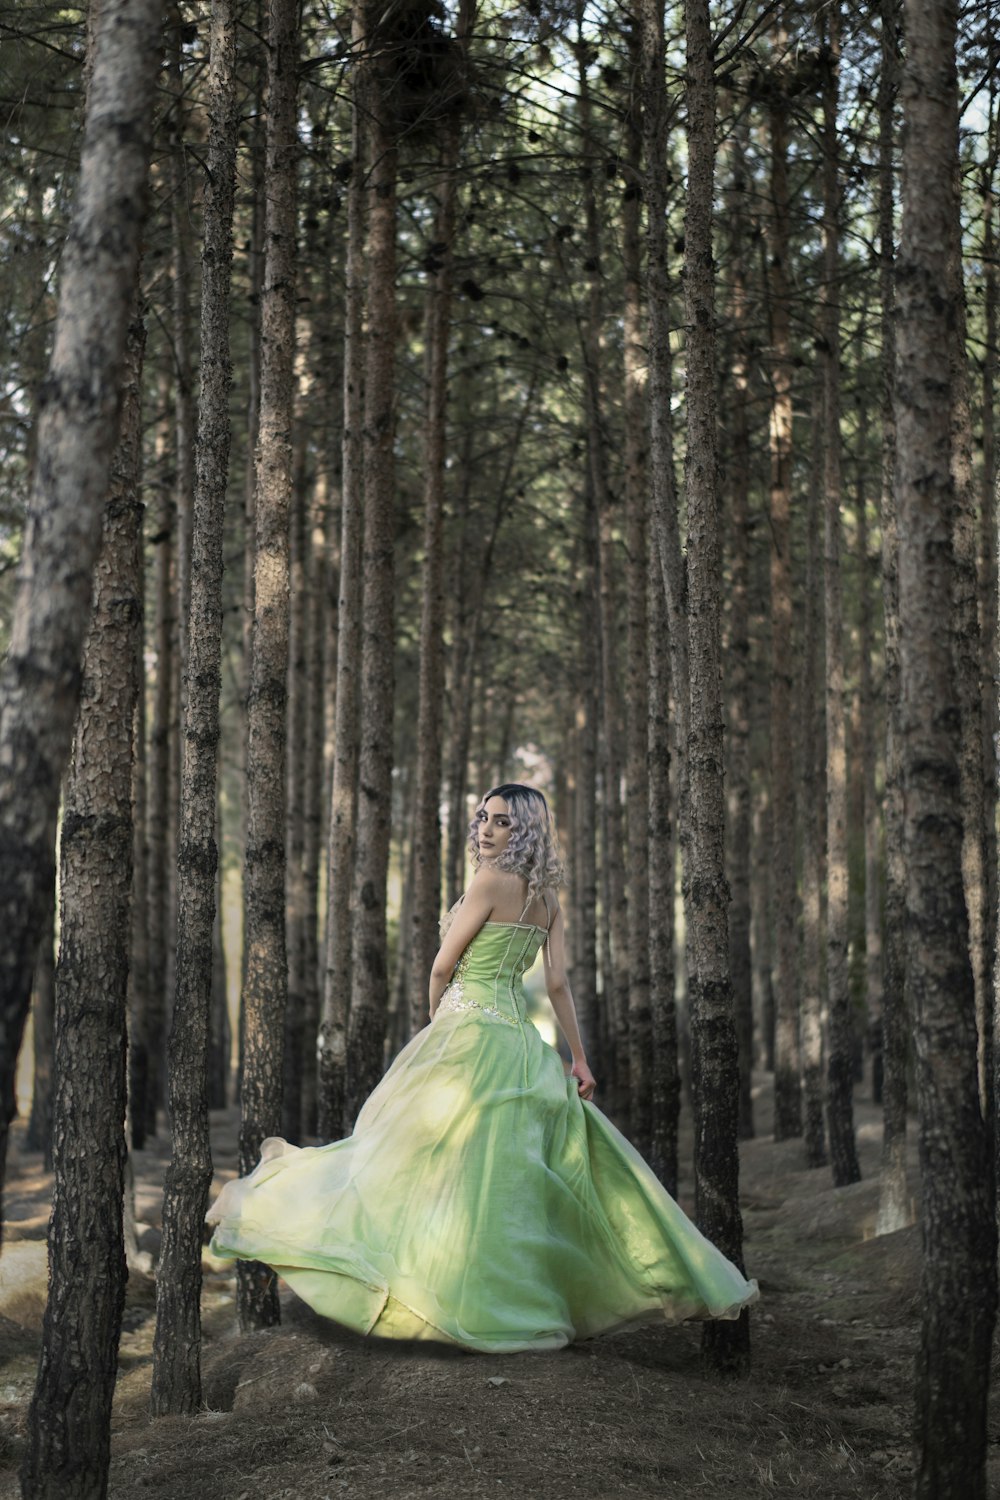 Femme en robe verte debout dans les bois